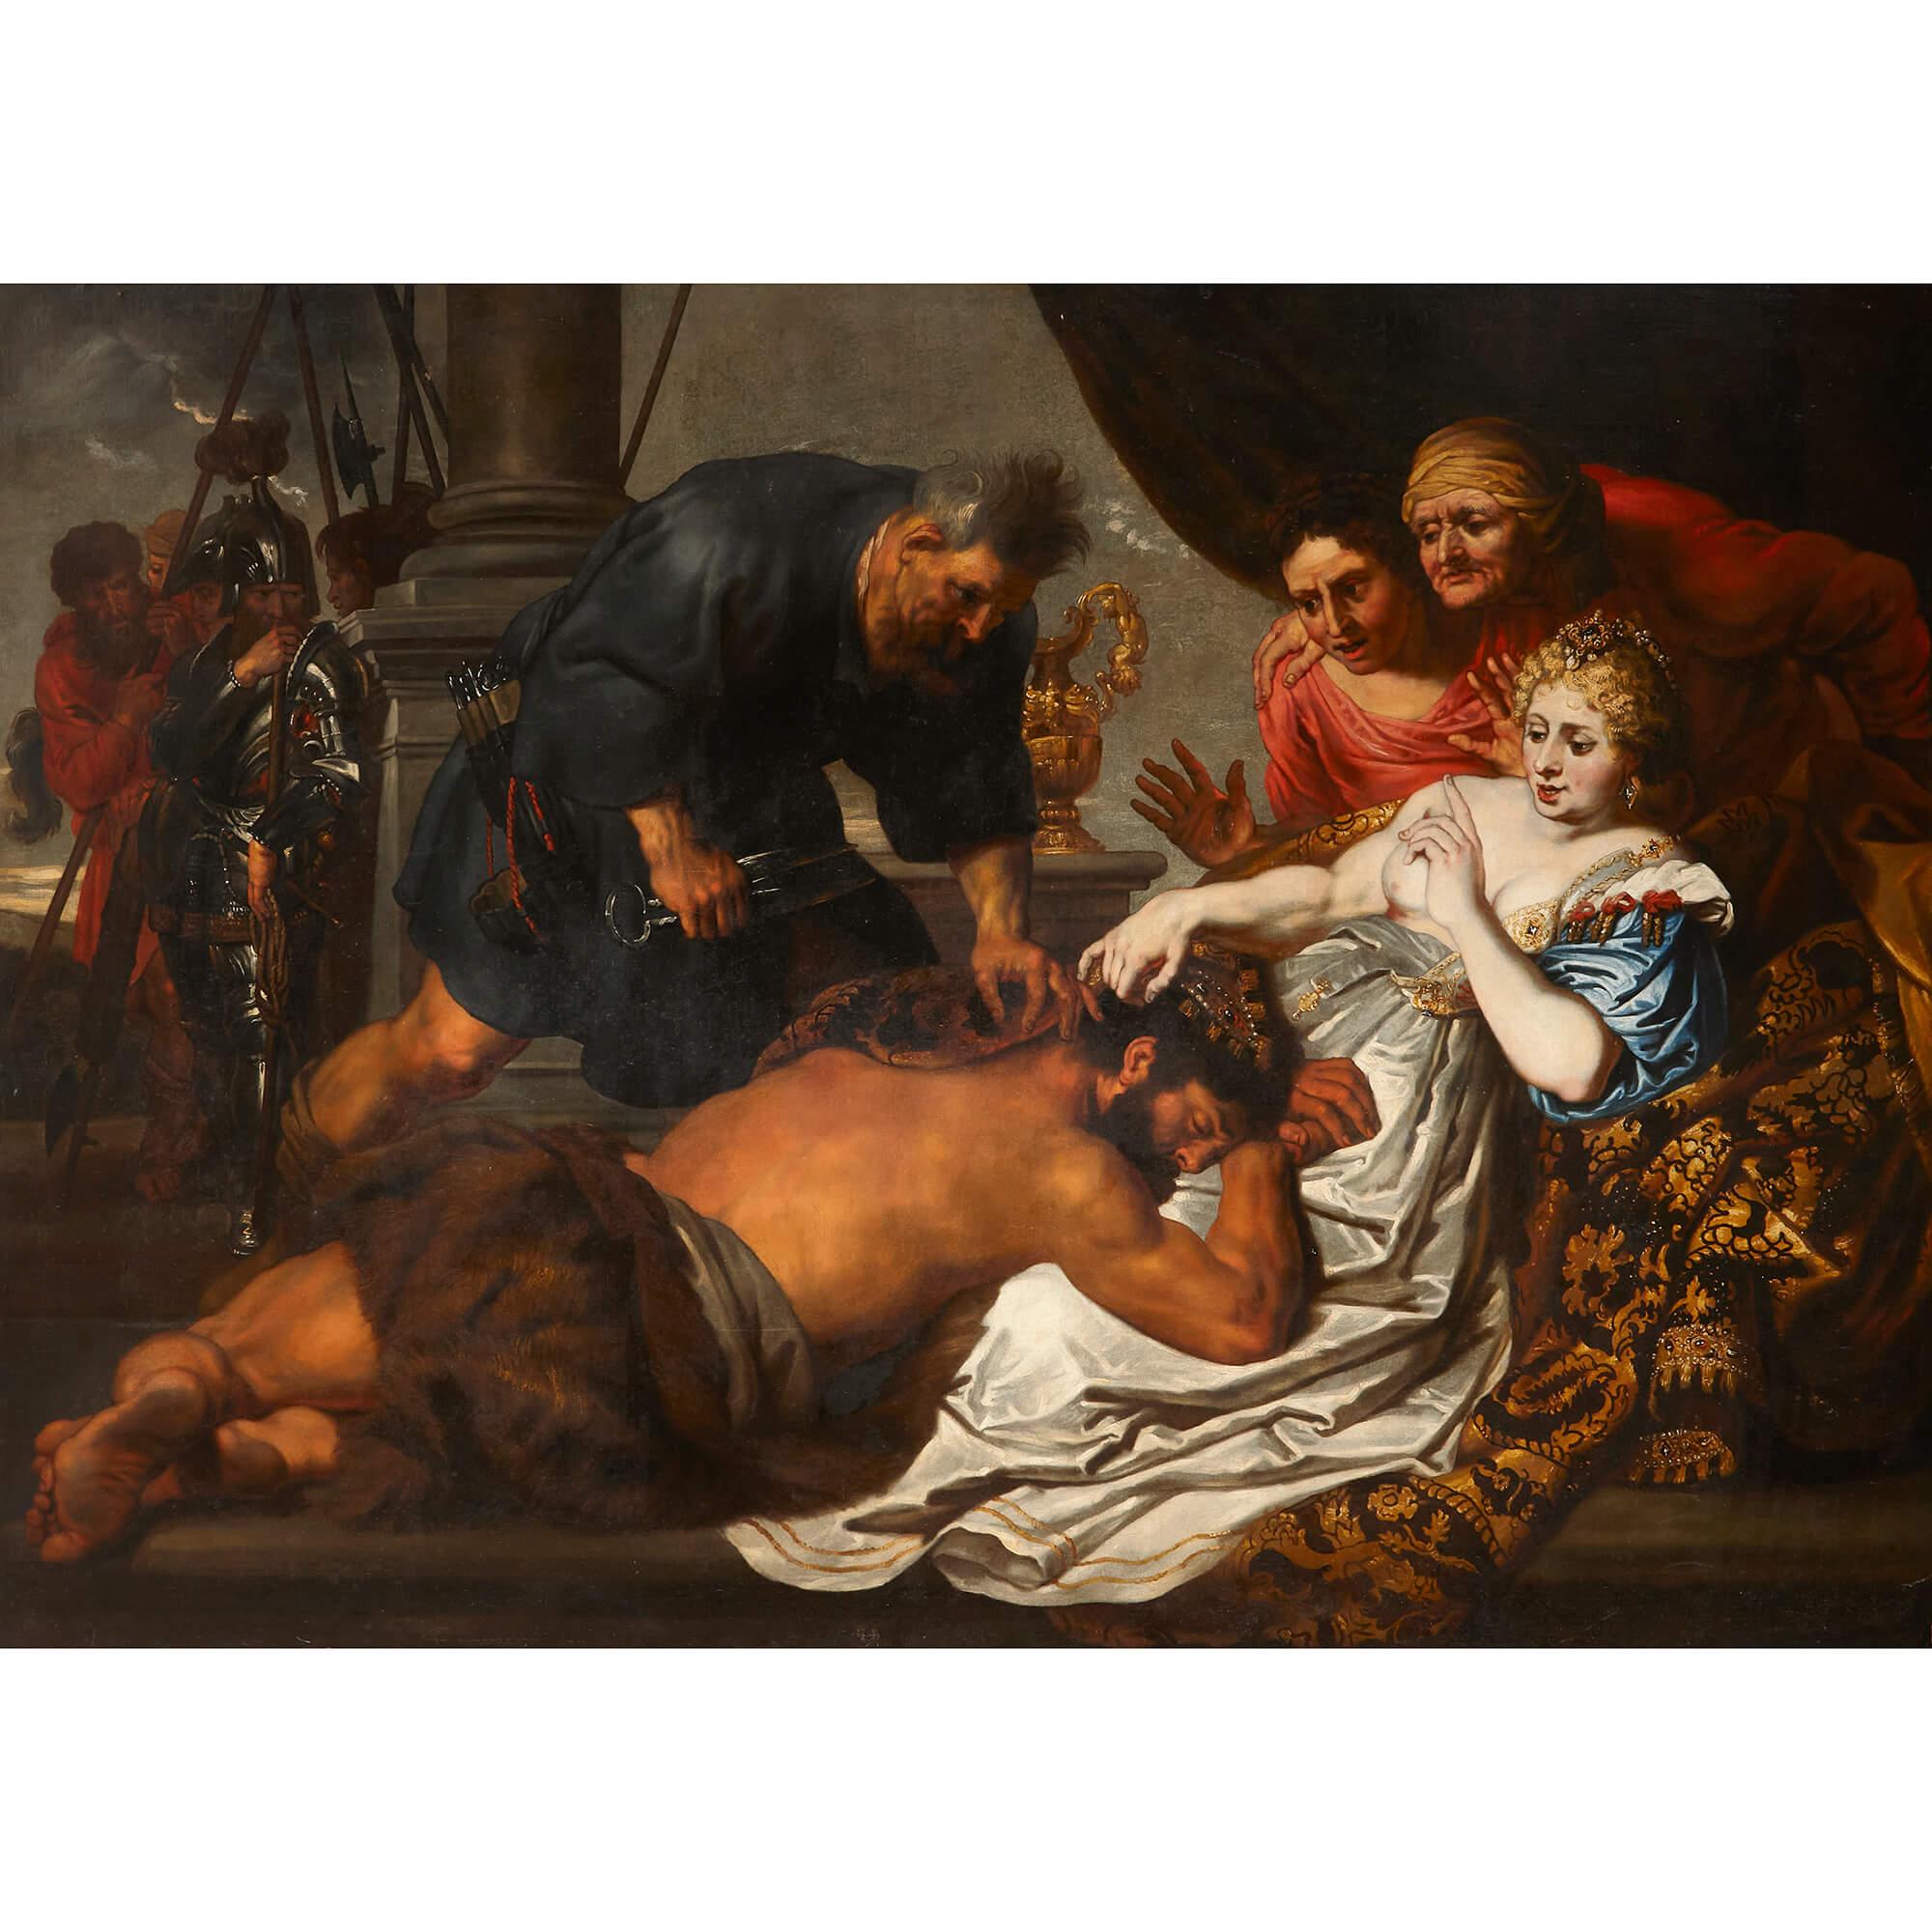 Großes antikes Ölgemälde von Samson und Delilah nach Anthony van Dyck, Anthony van Dyck – Painting von Anthony Van Dyck